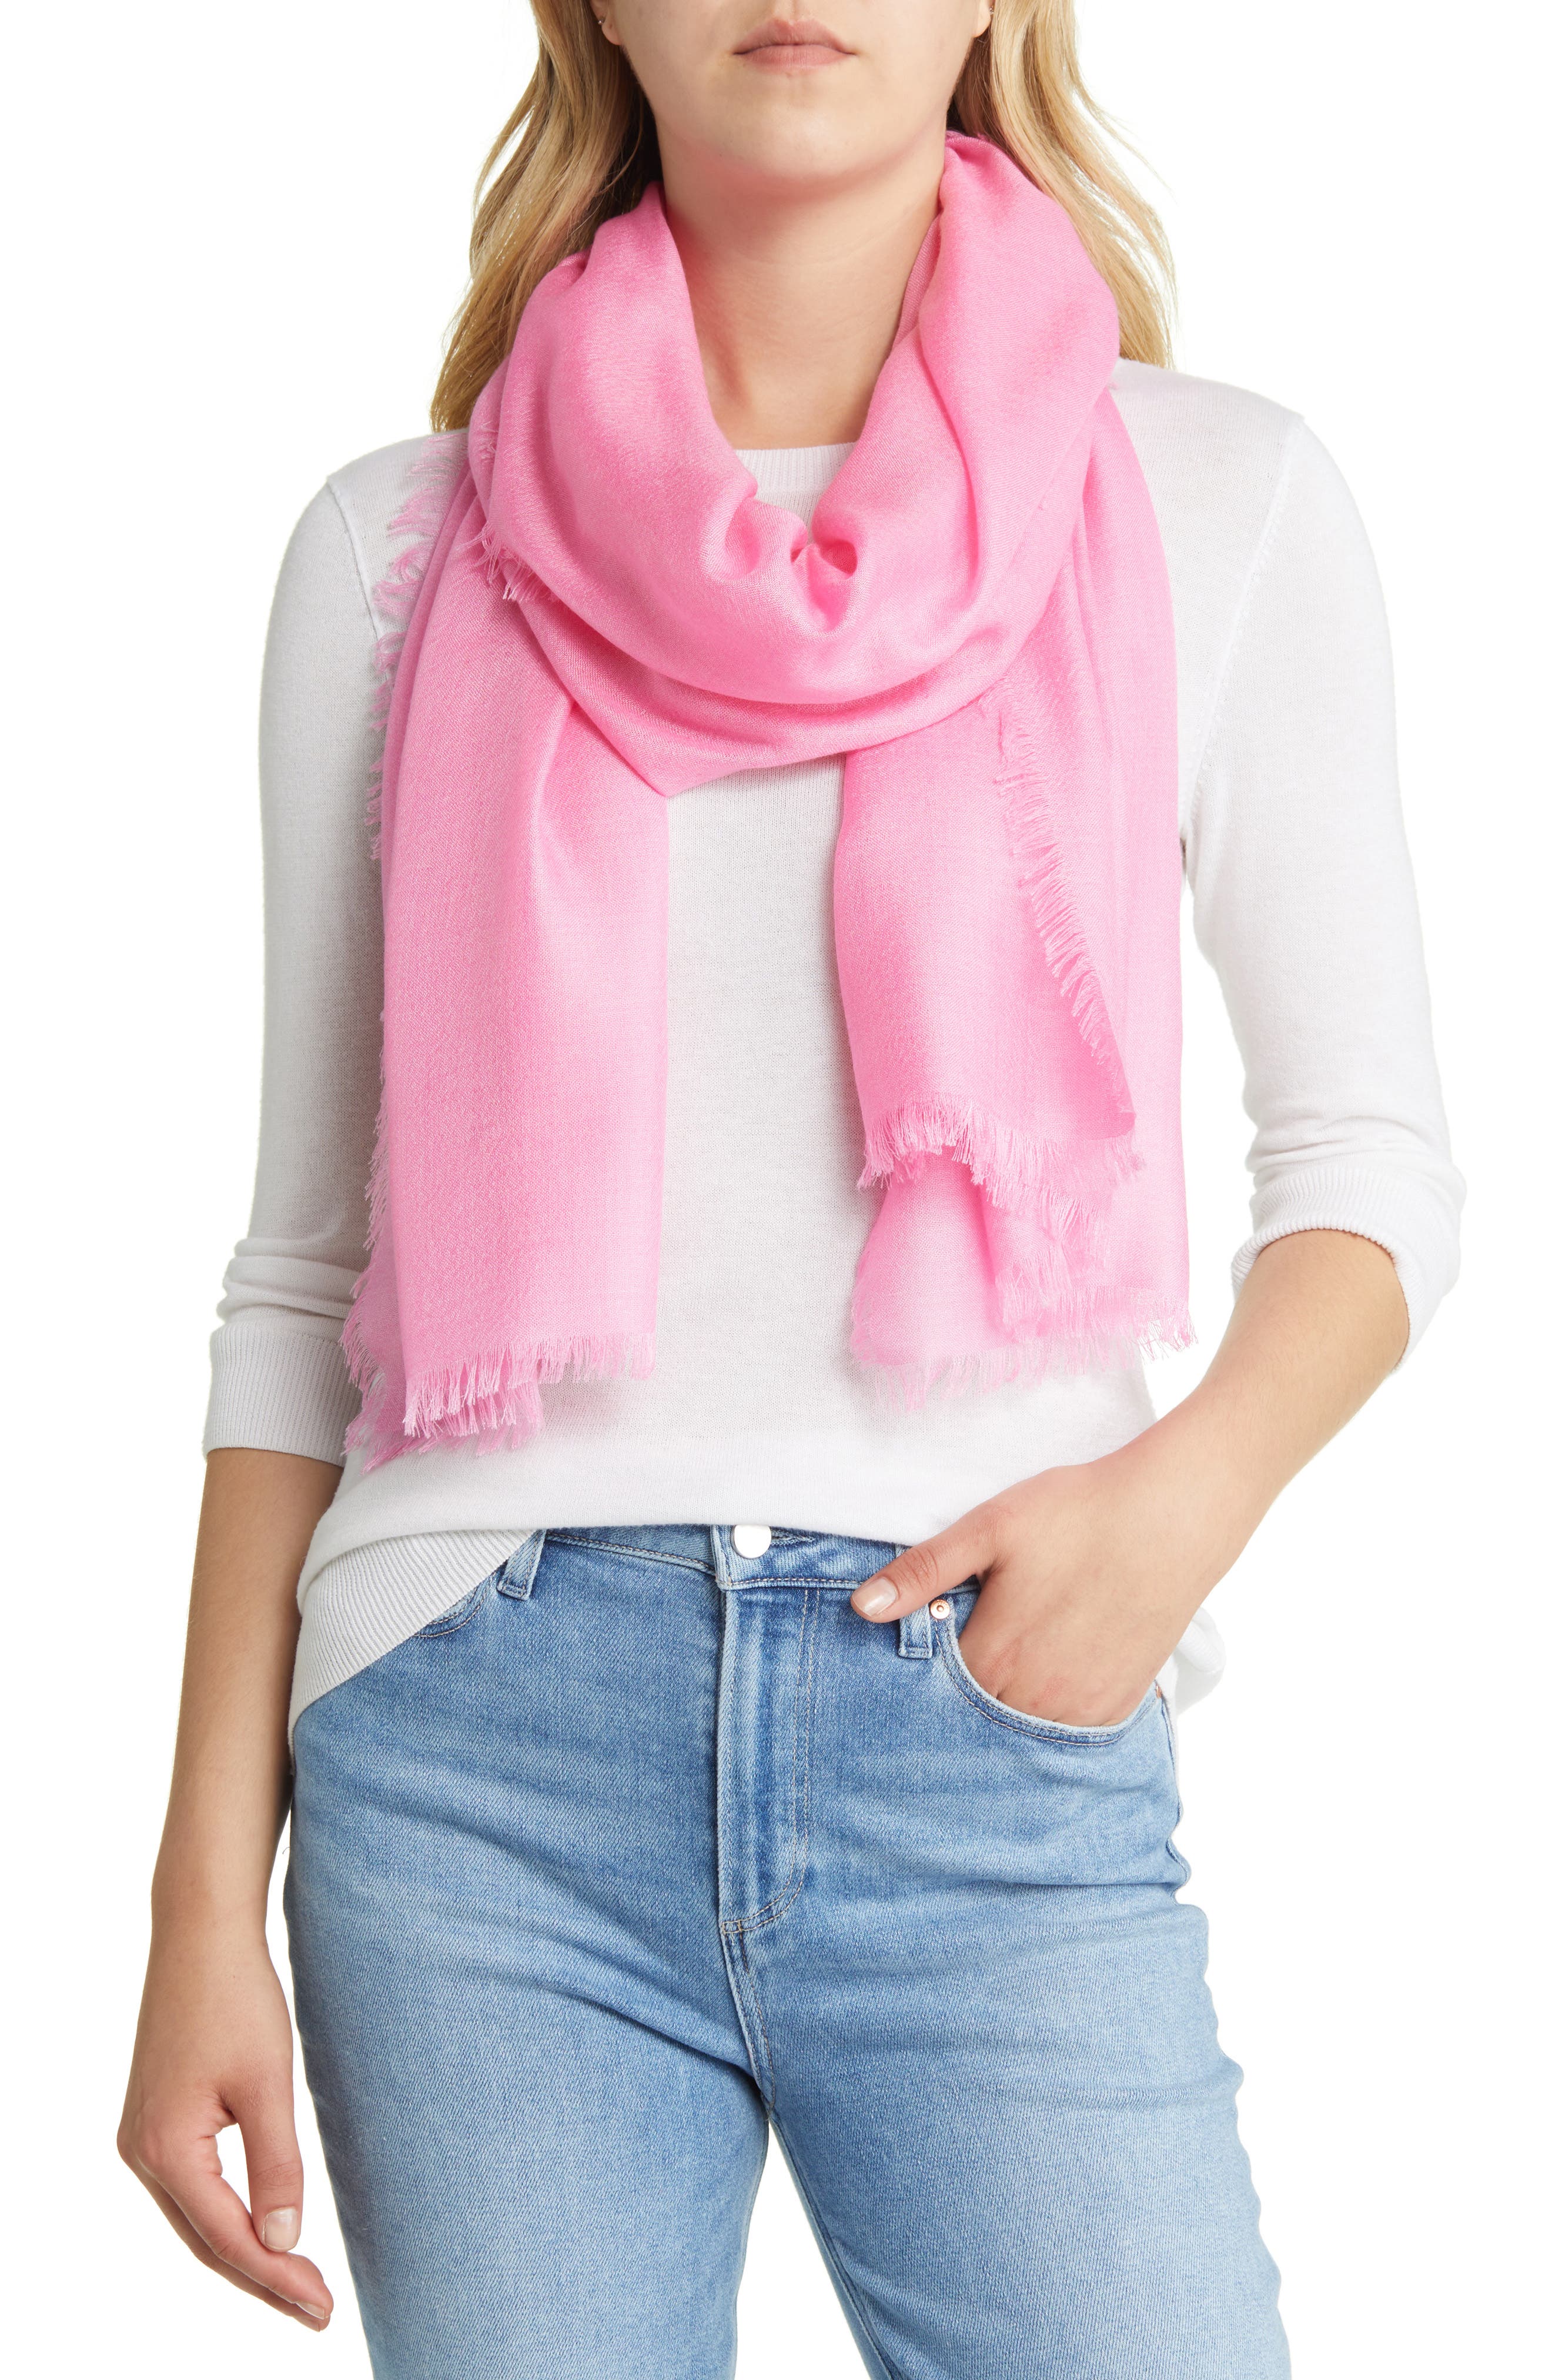 discount 69% Pink M Zara shawl WOMEN FASHION Accessories Shawl Pink 